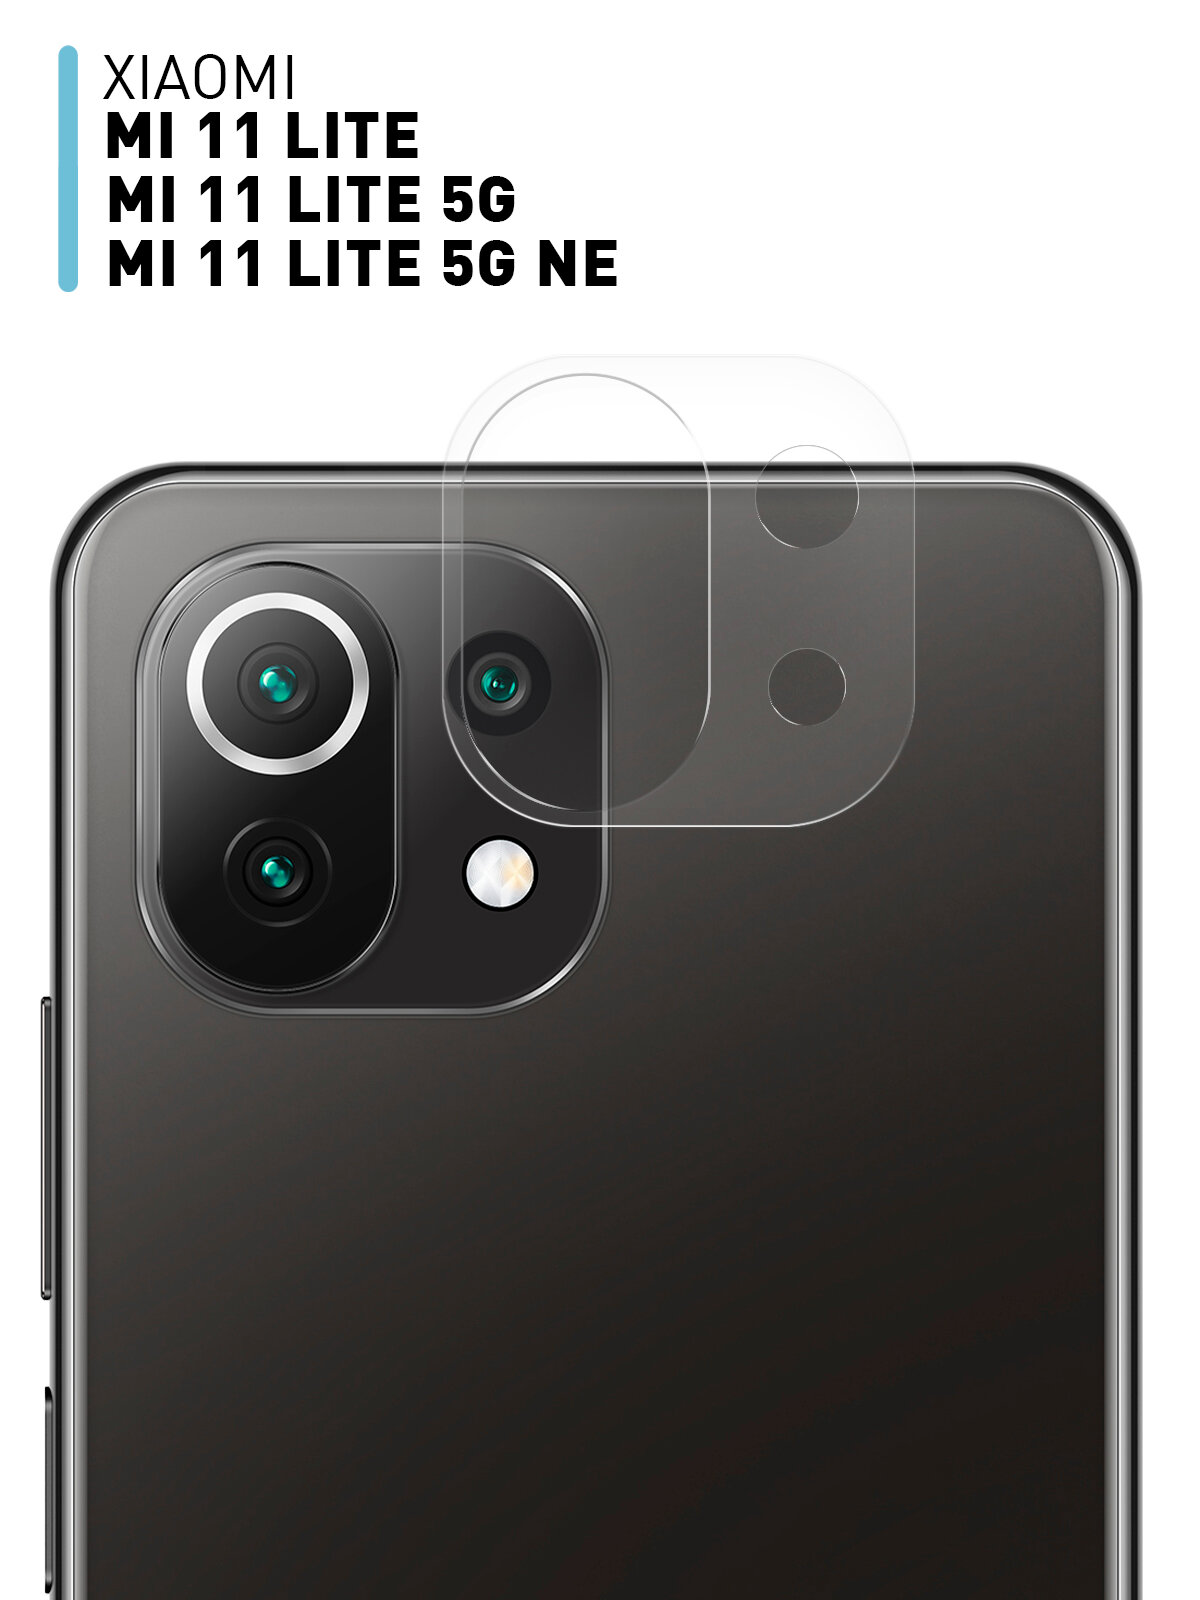 Защитное стекло на блок камер для Xiaomi Mi 11 Lite 11 Lite 5G 11 Lite 5G NE (Сяоми Ми 11 Лайт Ми 11 Лайт 5Г Не) противоударное легко наклеить